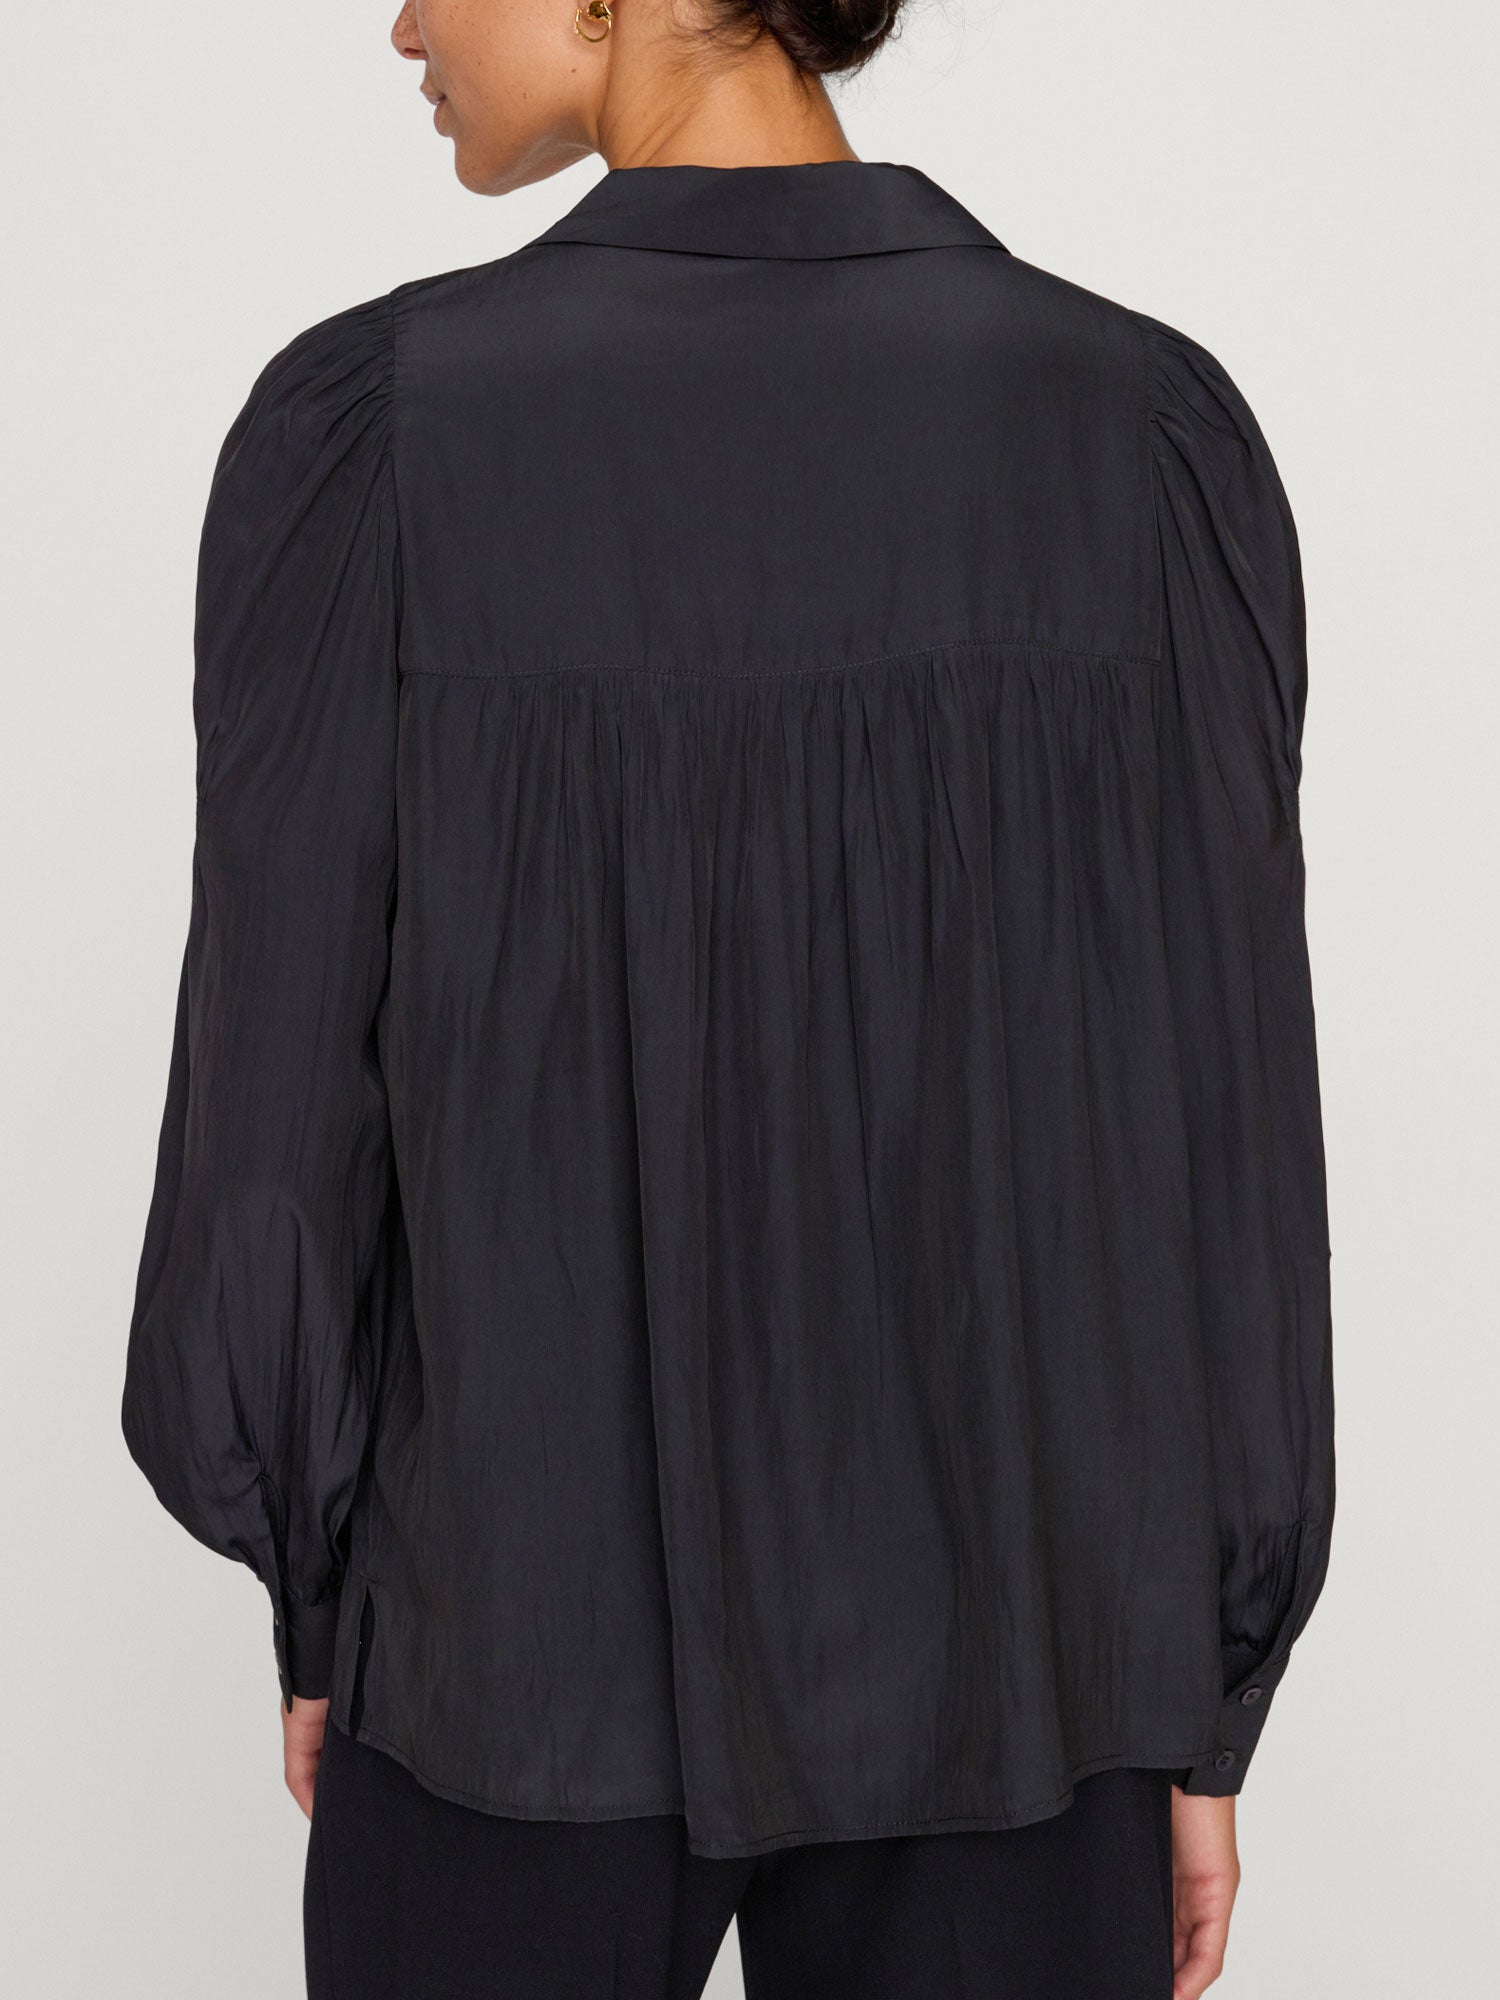 Anson black v-neck blouse back view